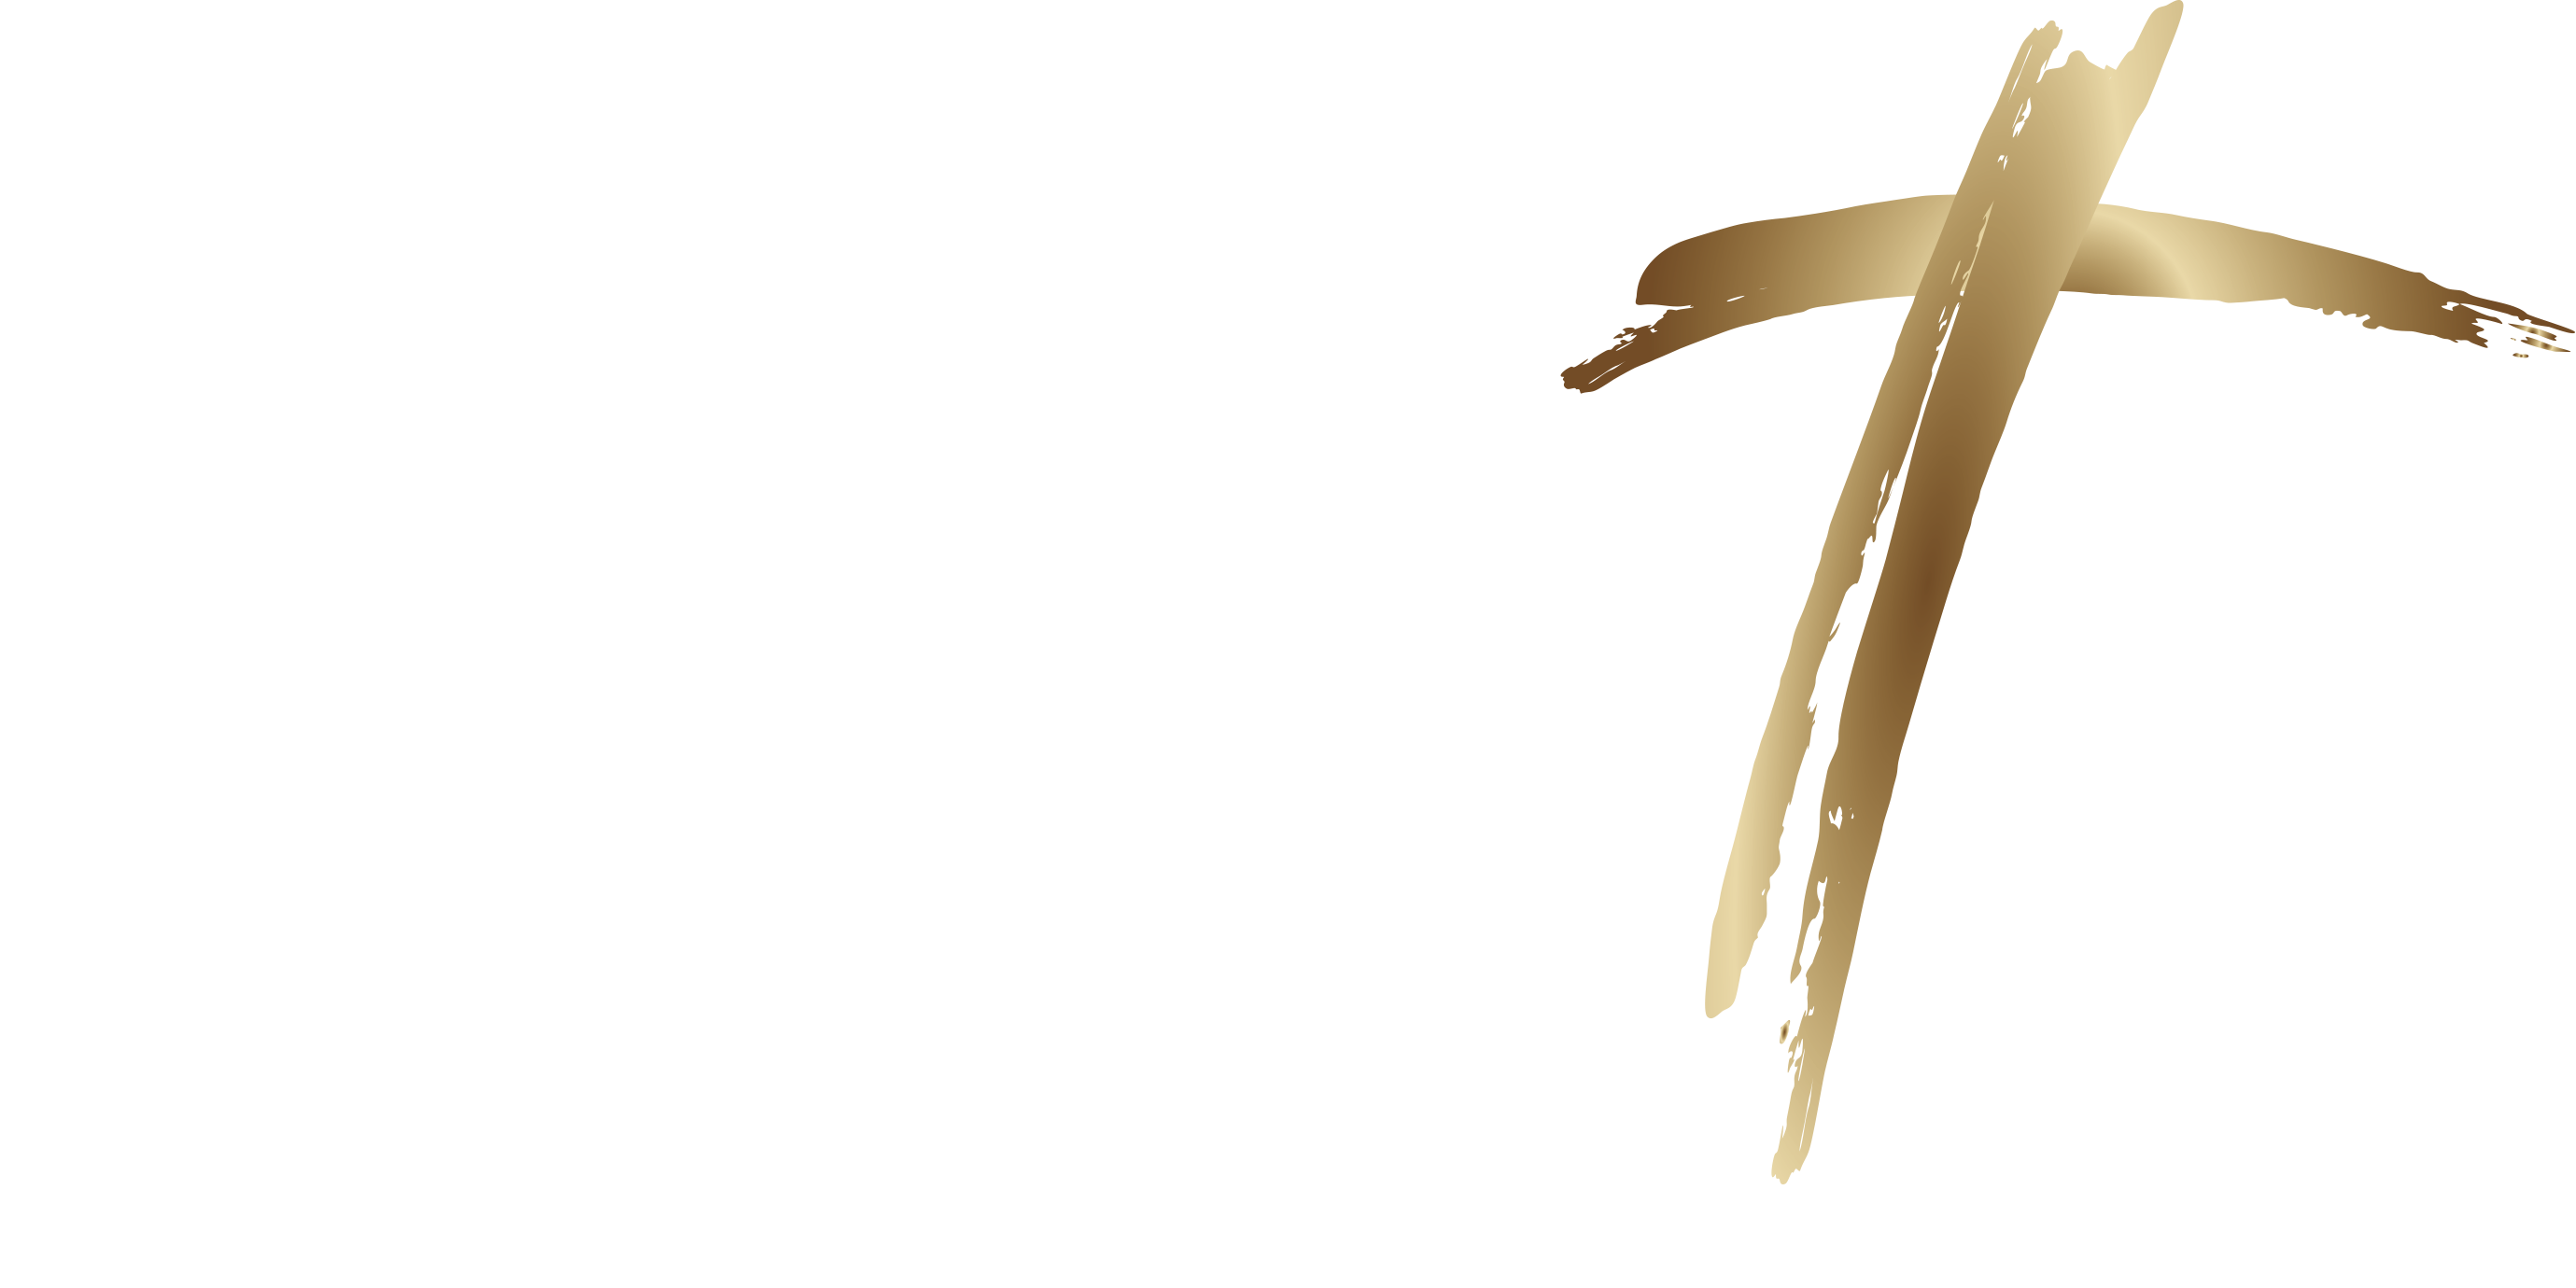 Crossgate Bible Church